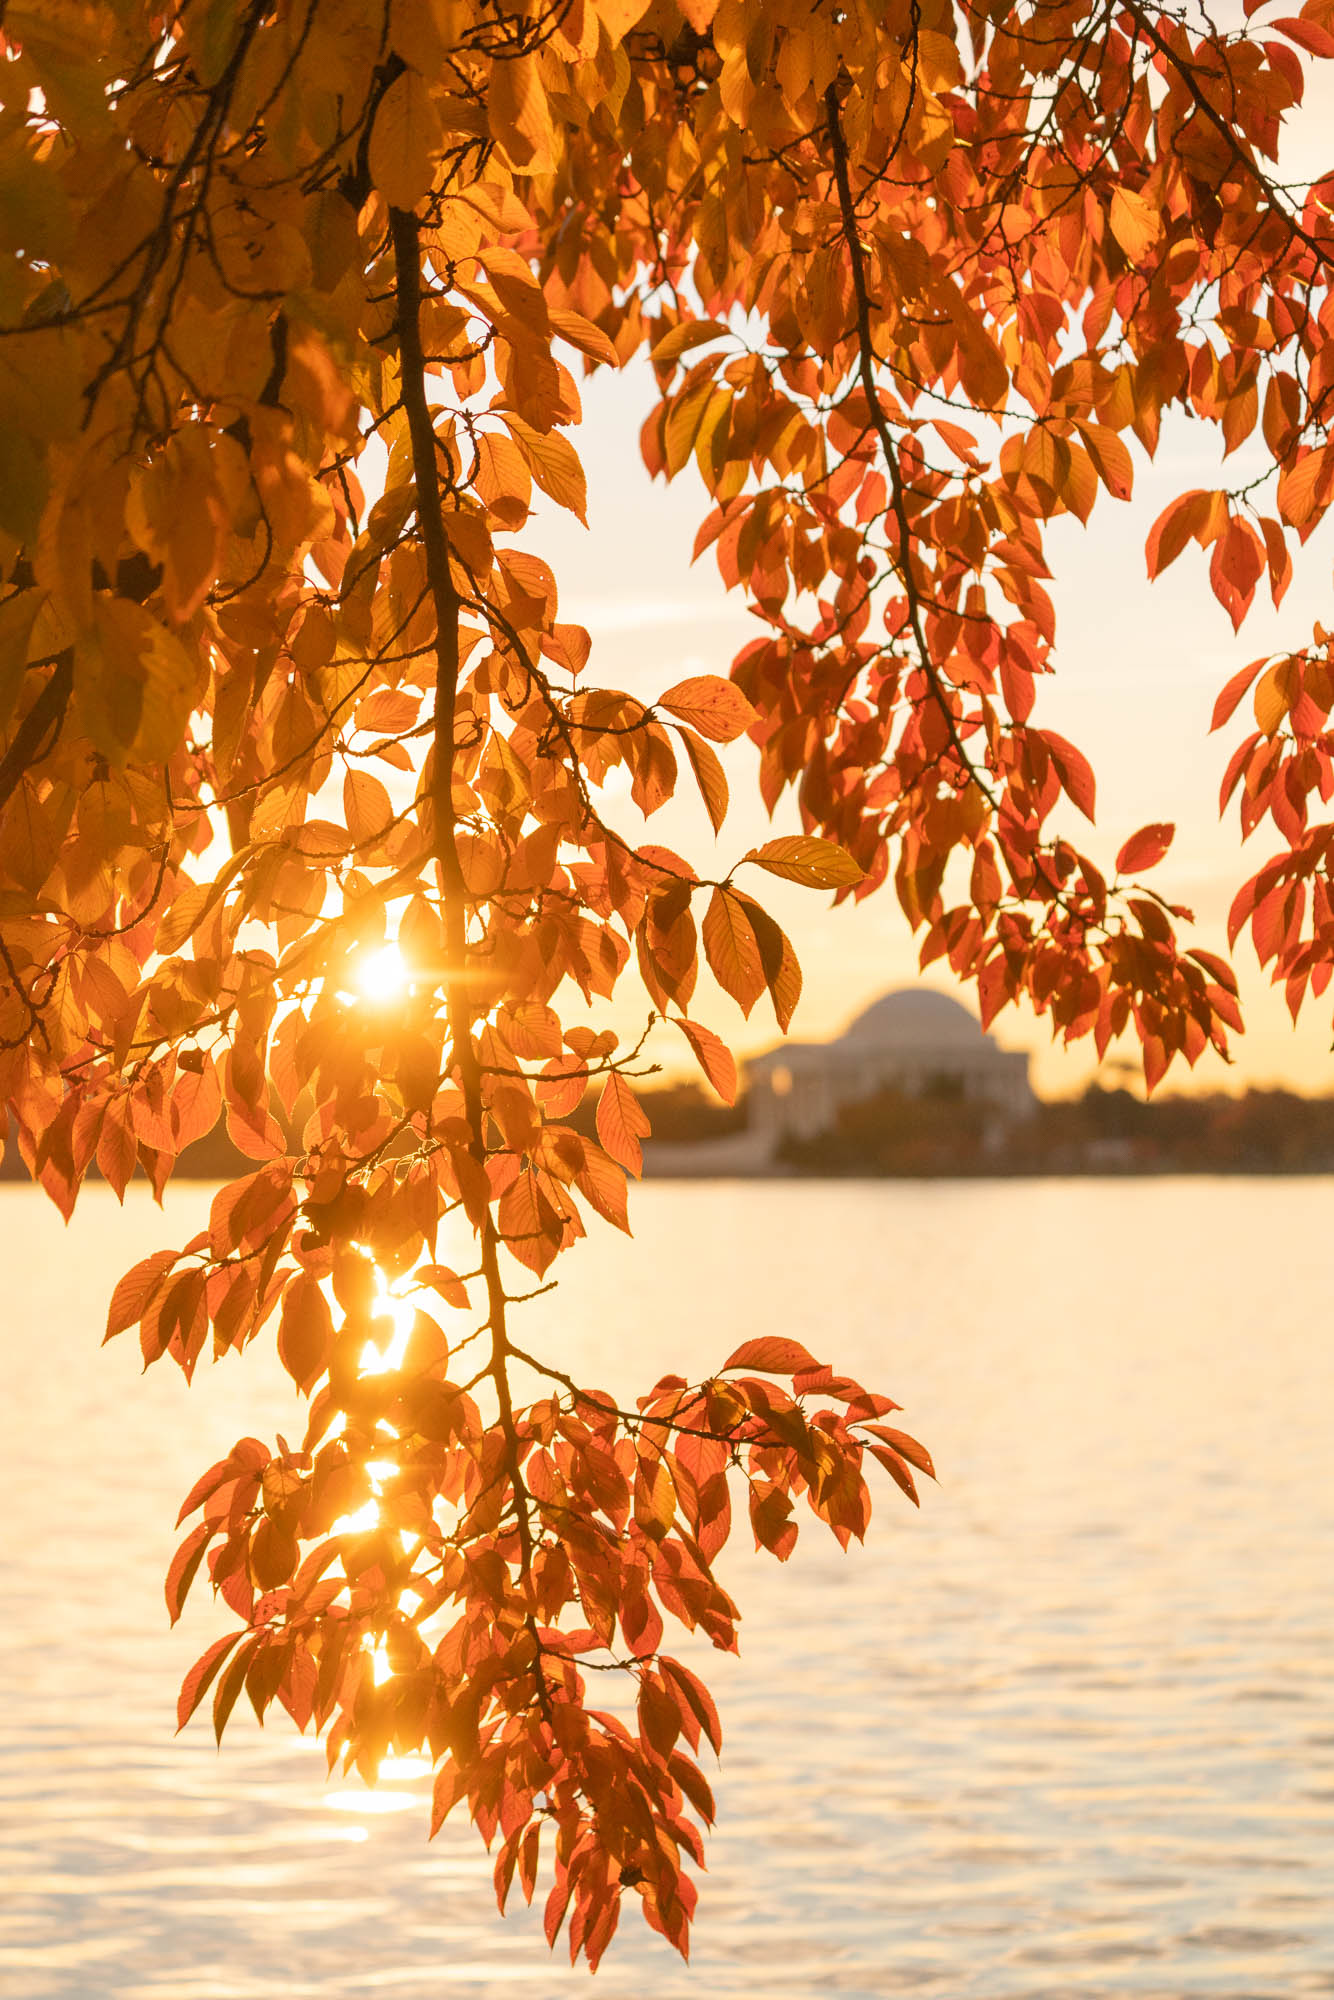 jefferson memorial, autumn, fall colors, leaves, orange,